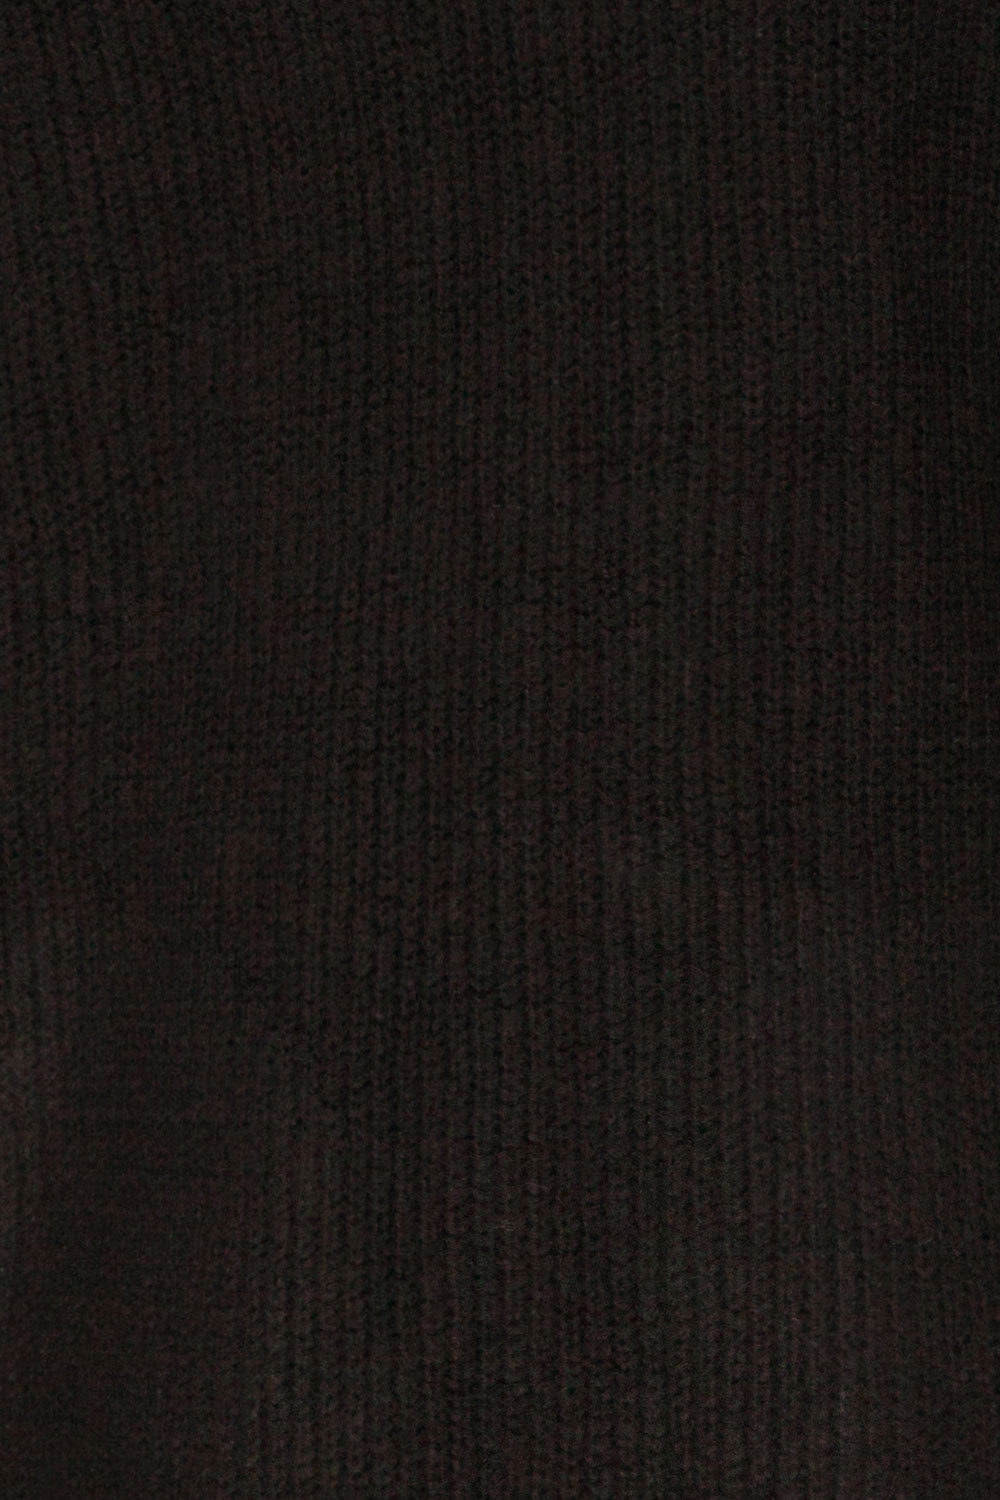 Arnhem Anis Black Knit Cardigan w/ Pockets | La Petite Garçonne fabric detail 